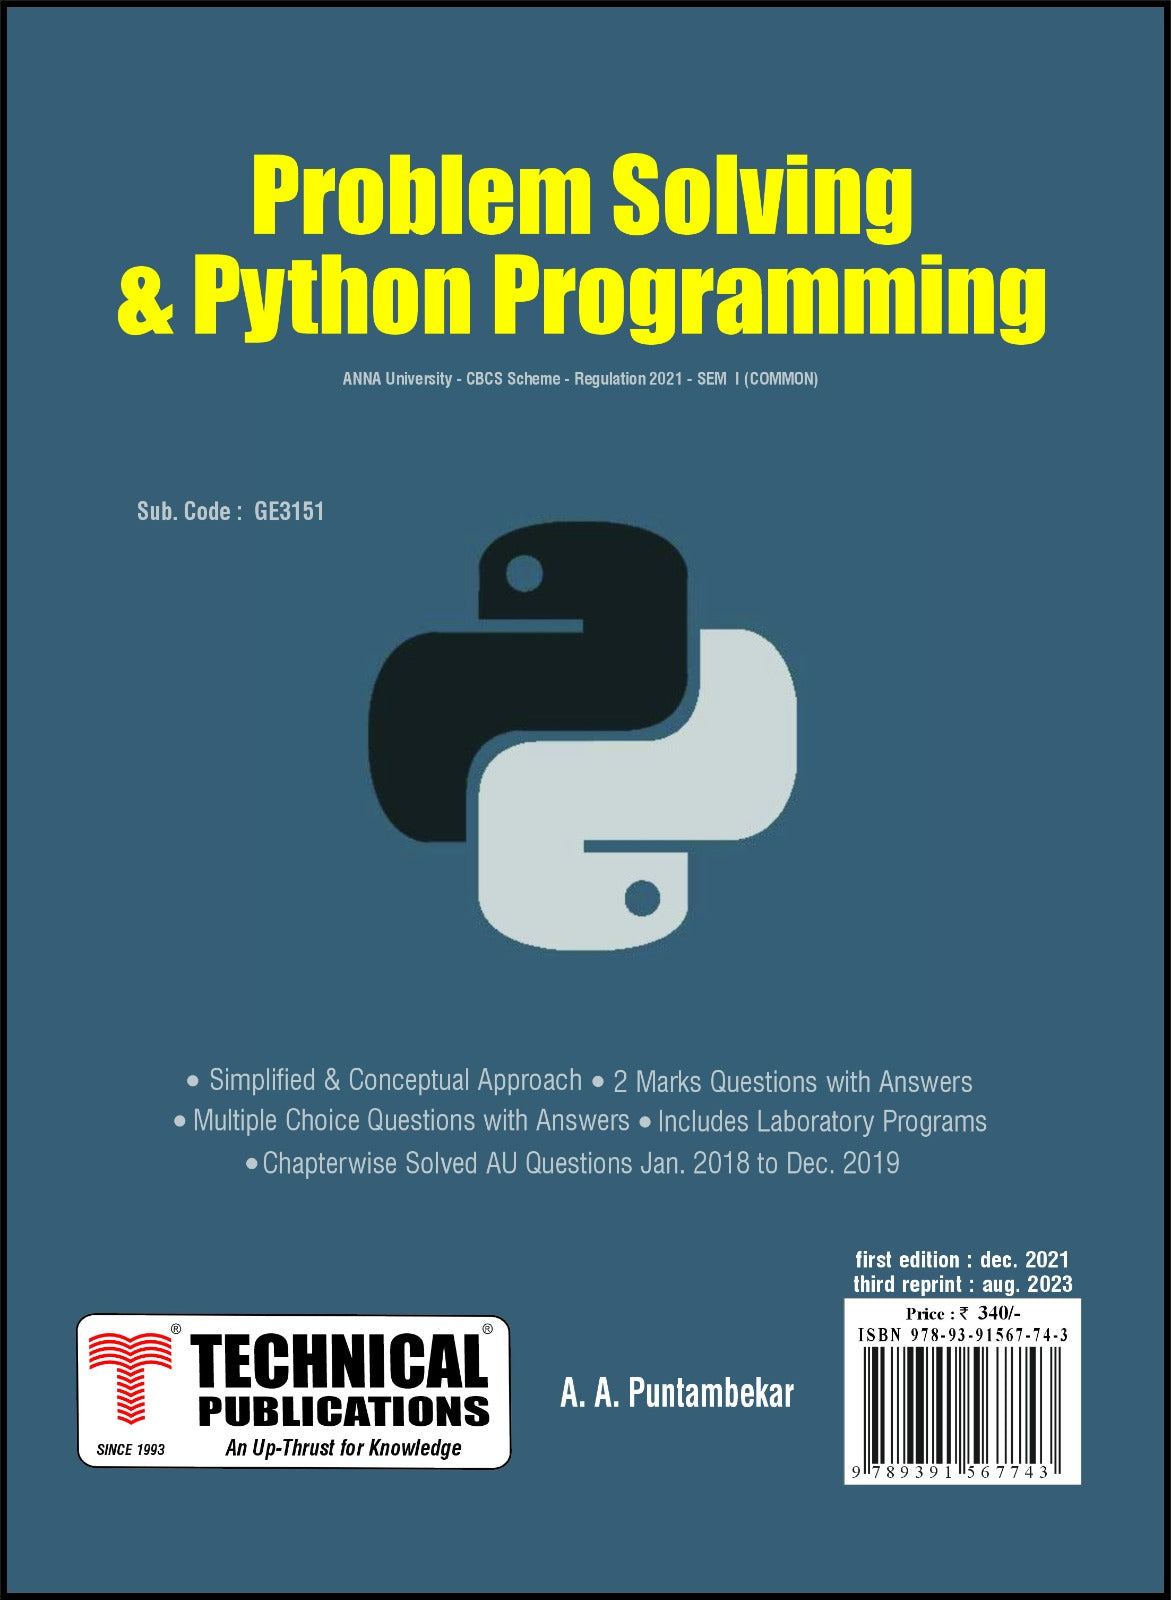 ge3151 problem solving and python programming syllabus pdf